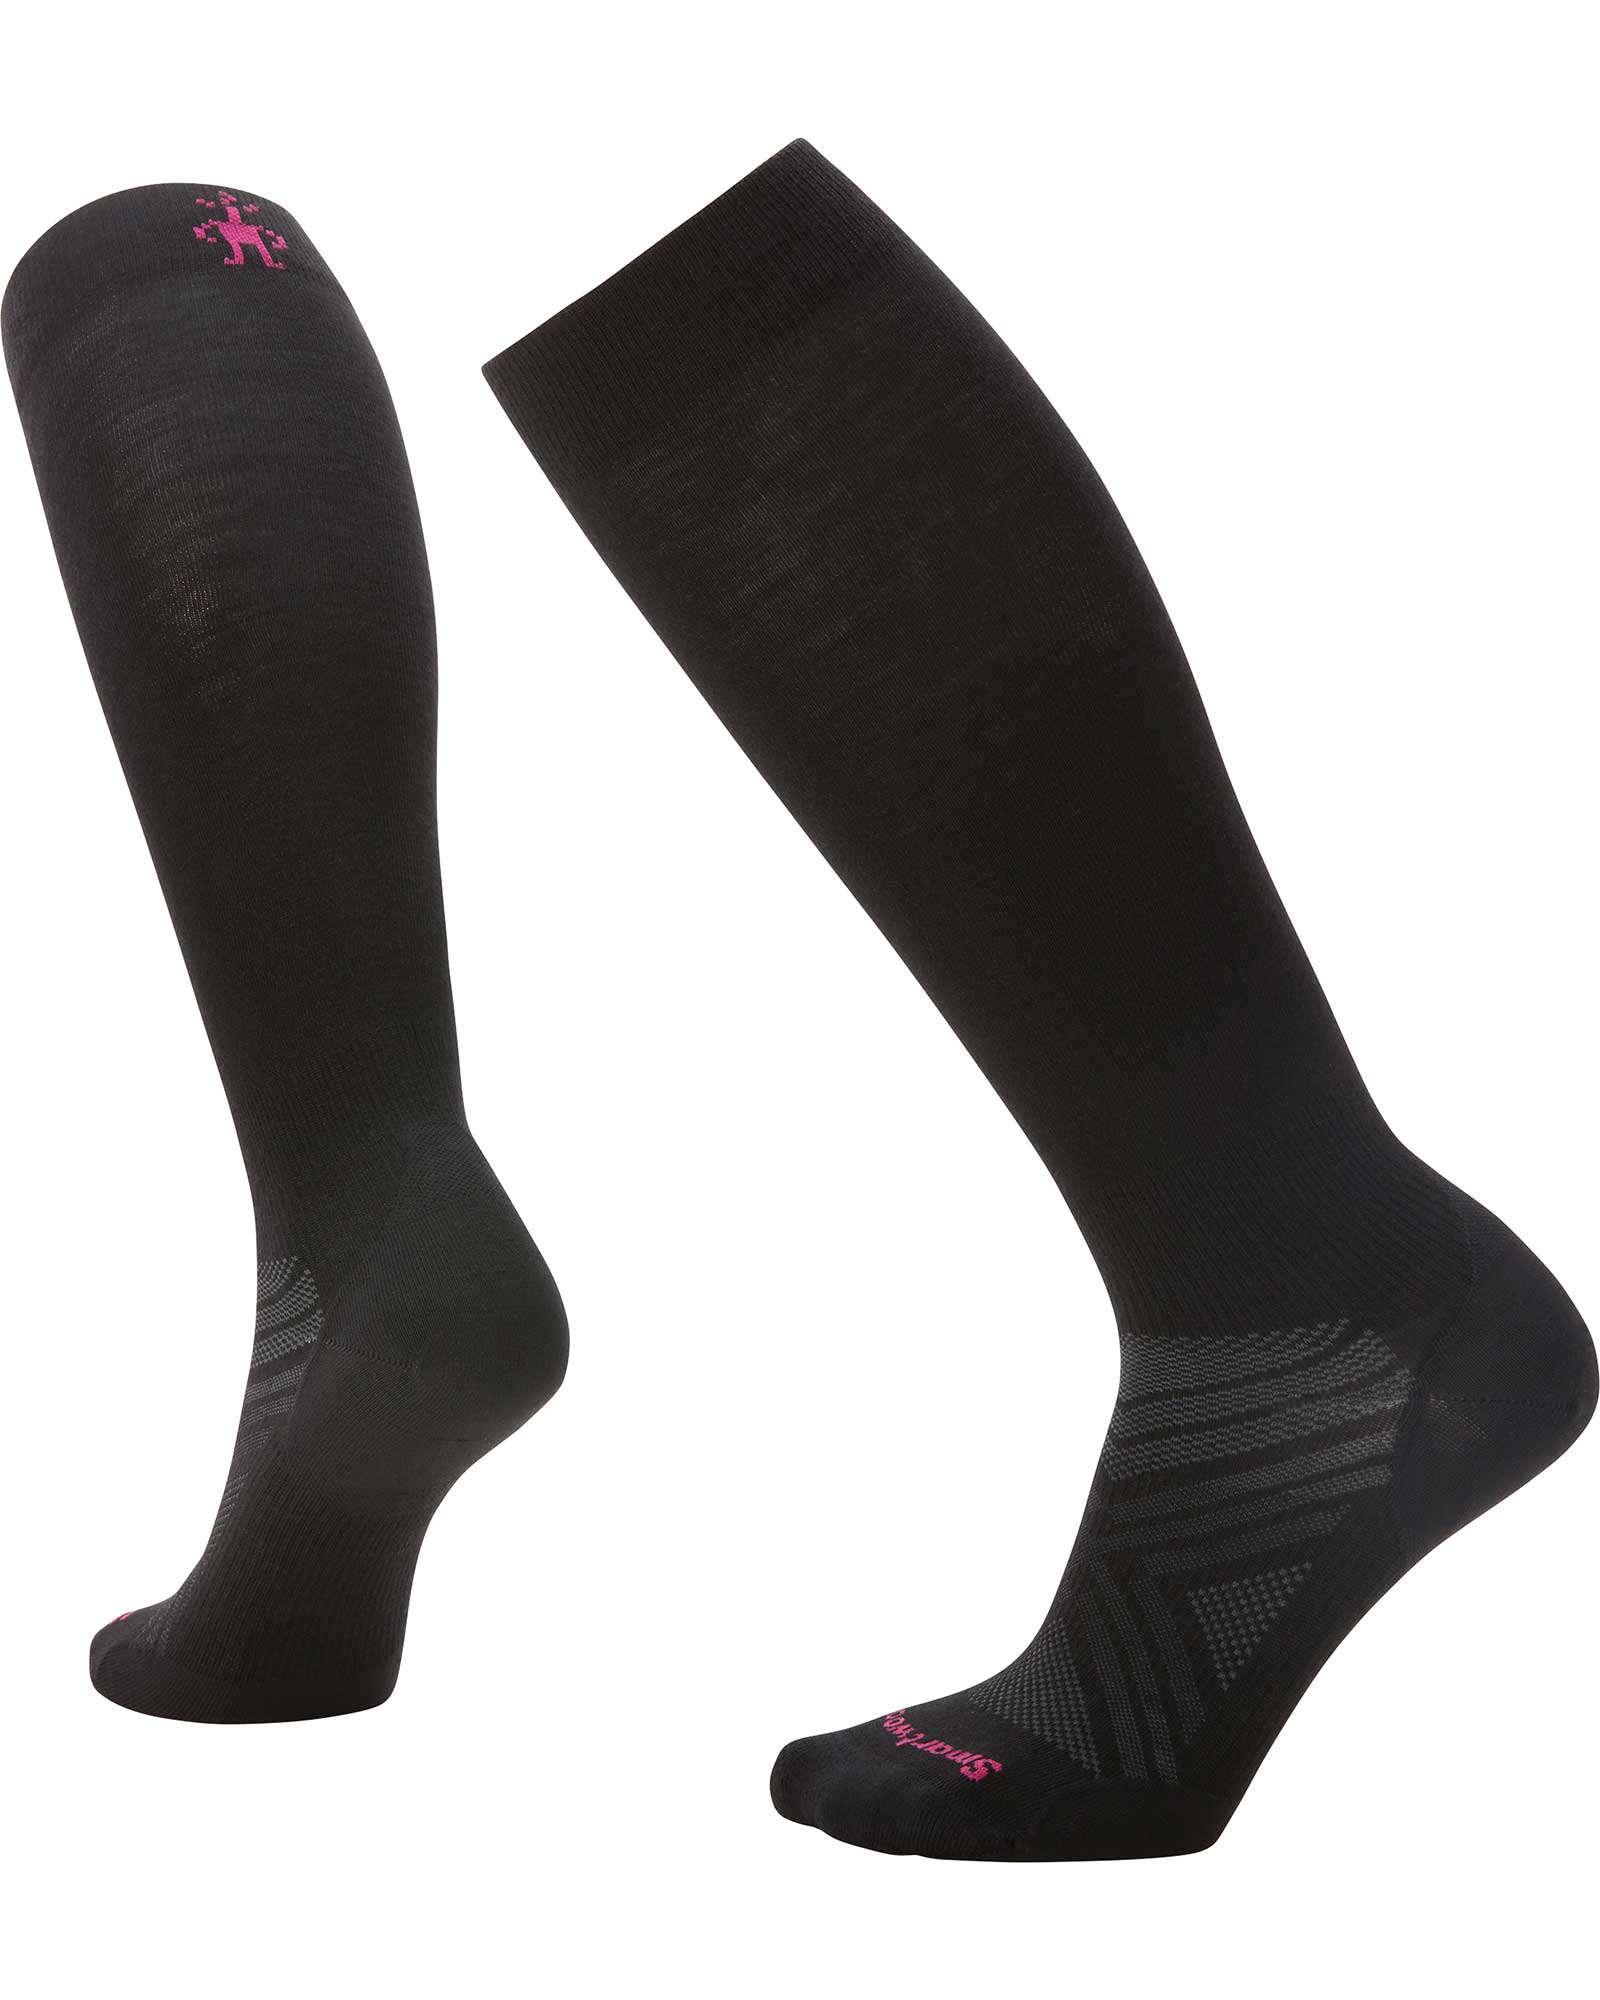 Smartwool Women's Zero Cushion Ski Socks